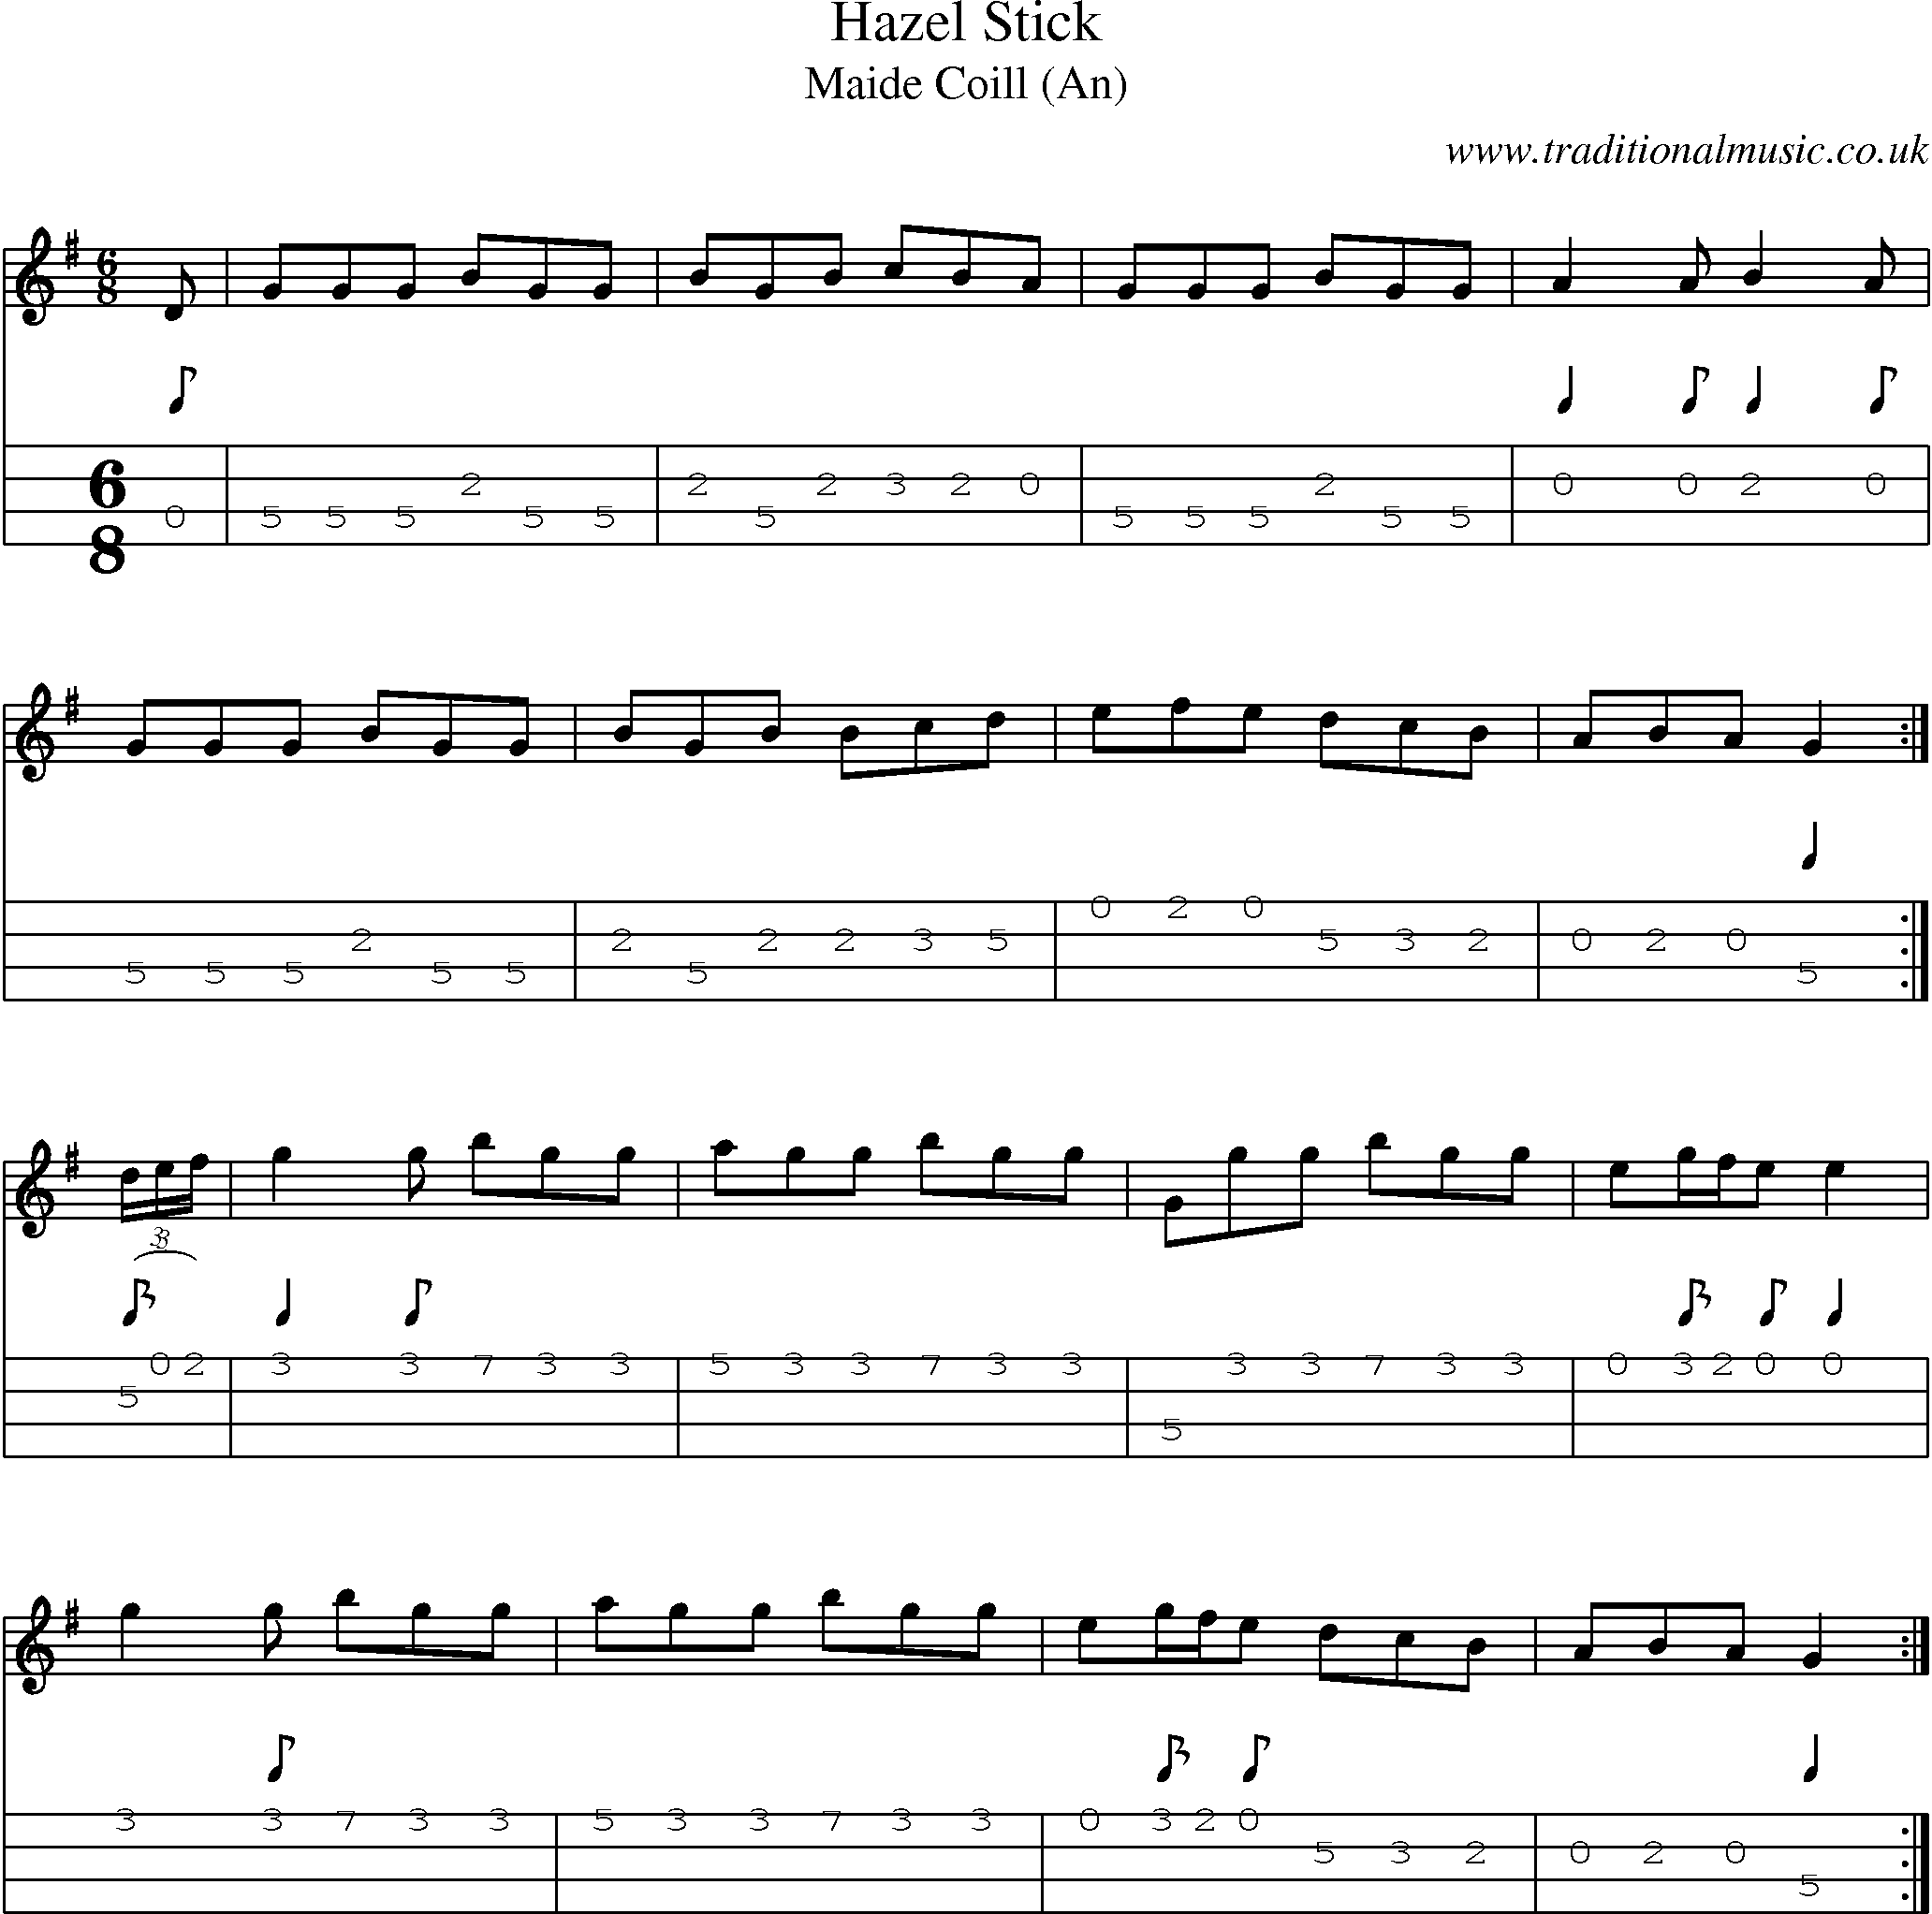 Music Score and Mandolin Tabs for Hazel Stick